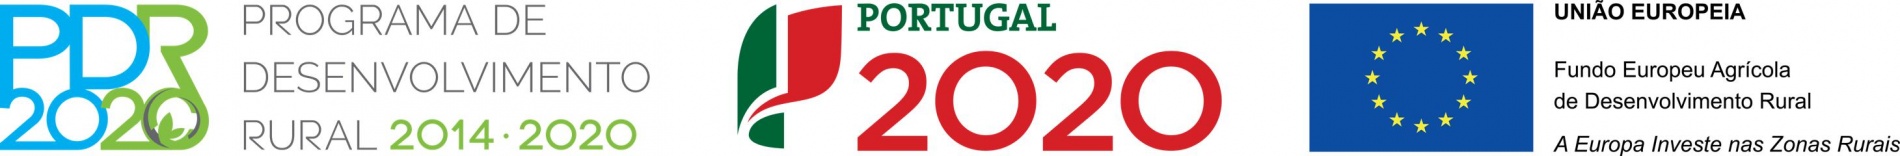 Programa de Desenvolvimento Rural 2014- 2020 - Portugal 2020